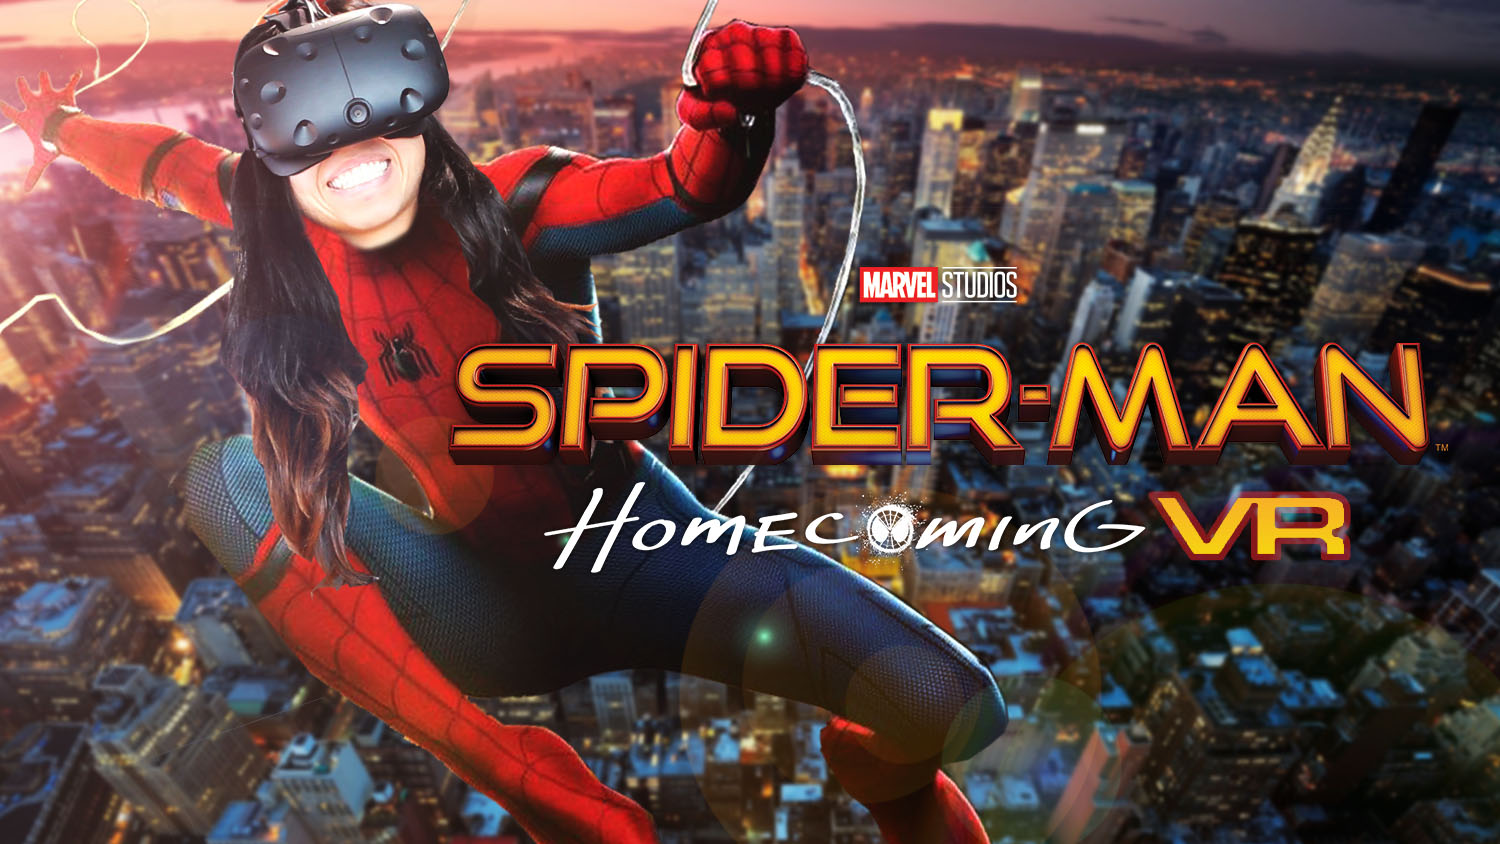 Vr пауки. Spider-man: Homecoming VR. Человек паук VR. Spider-man: Homecoming - Virtual reality. Spider-man VR Homecoming игра 2017.